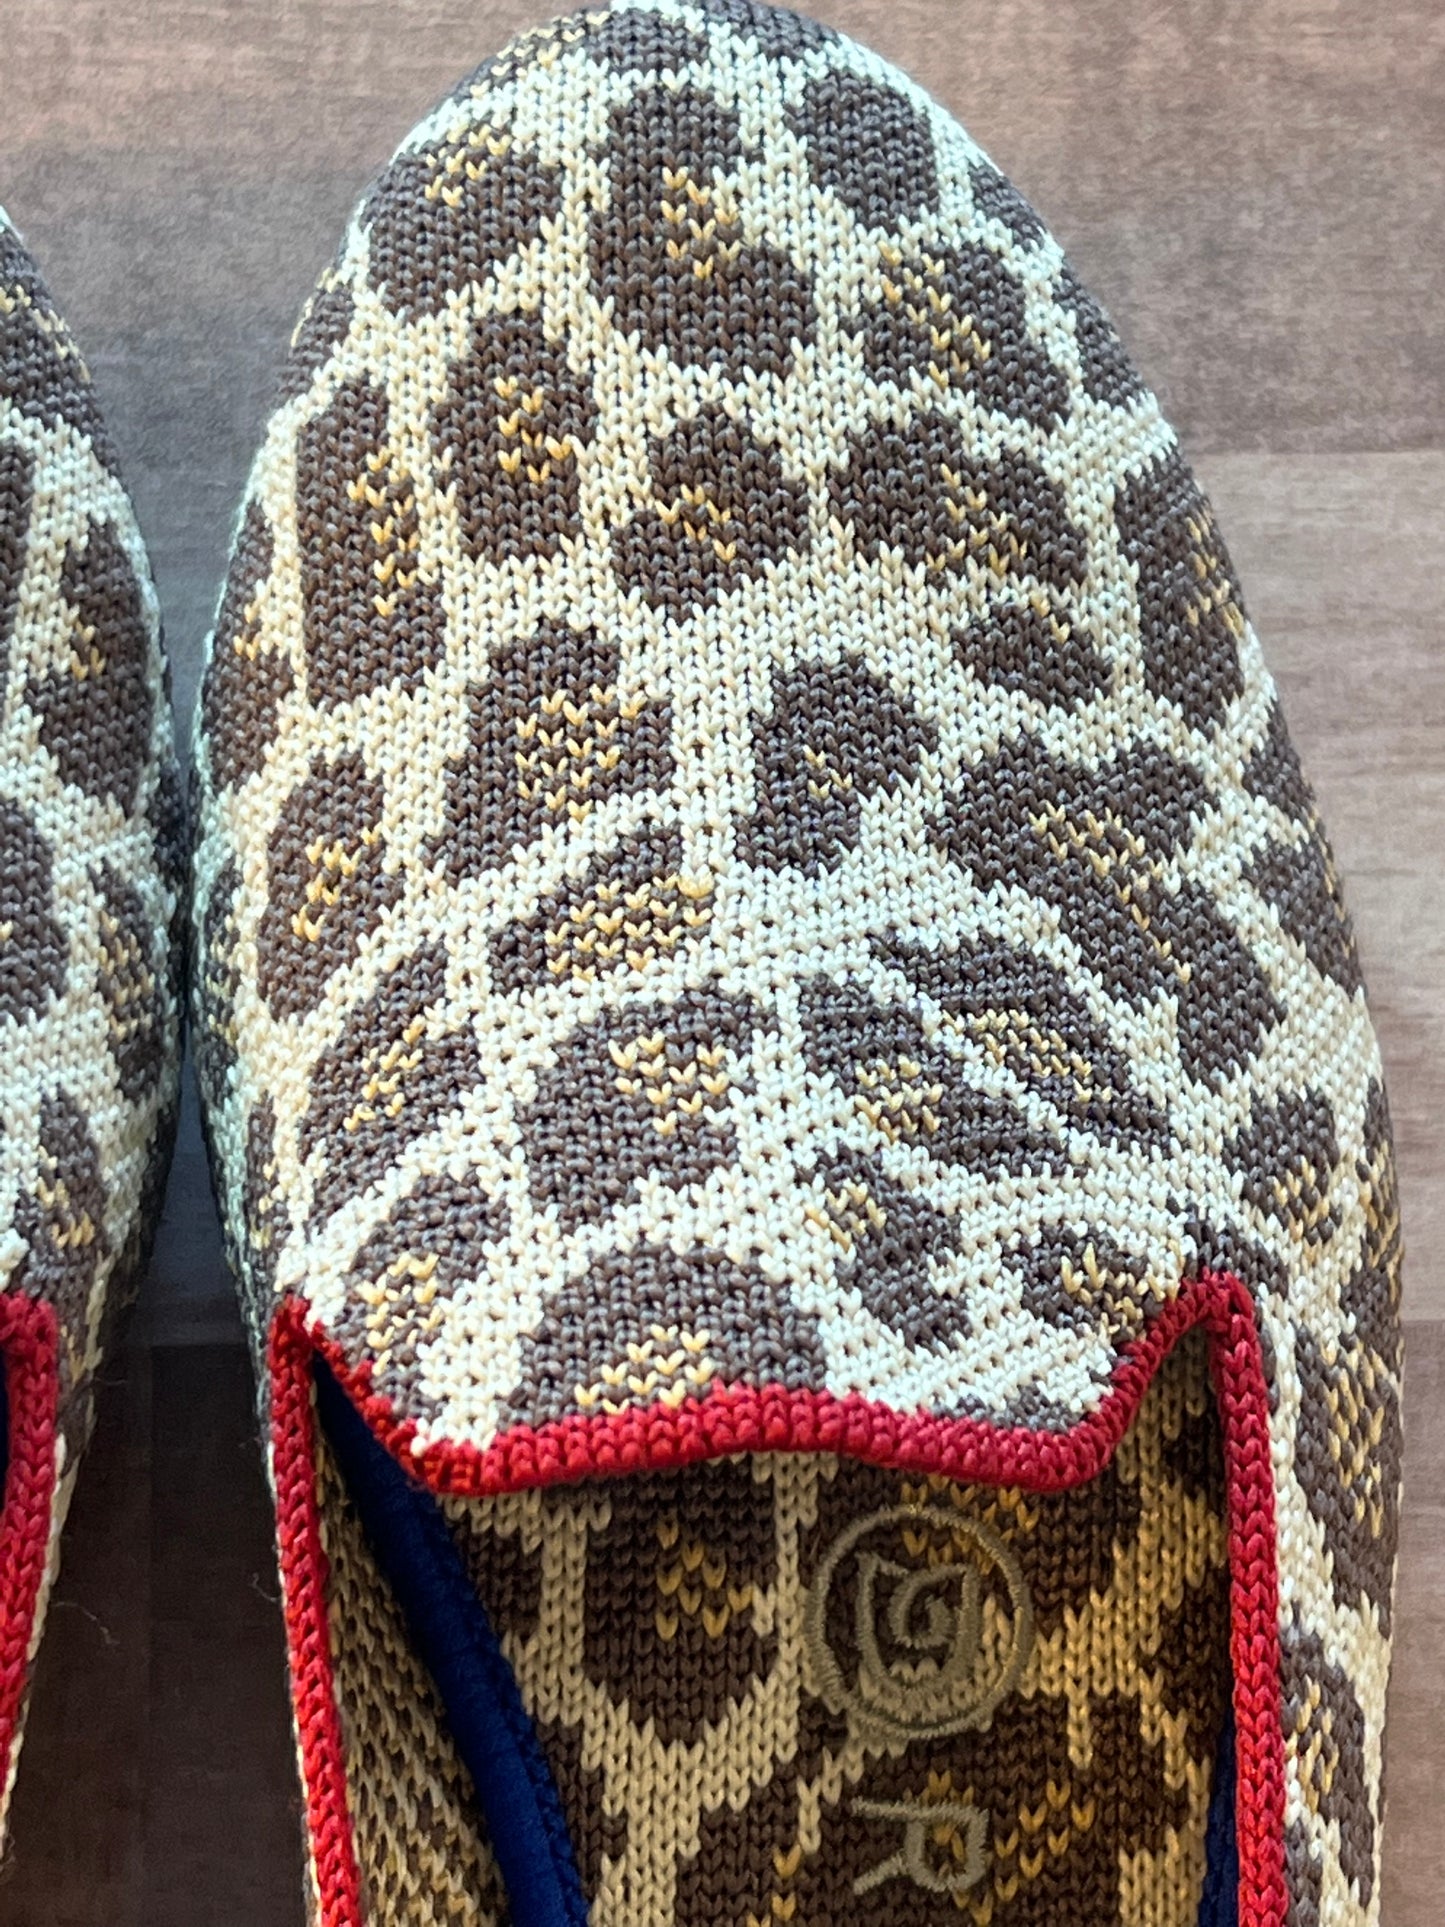 EUC ~ Rothy's Retired Mocha Spot Loafers - Size 5.5